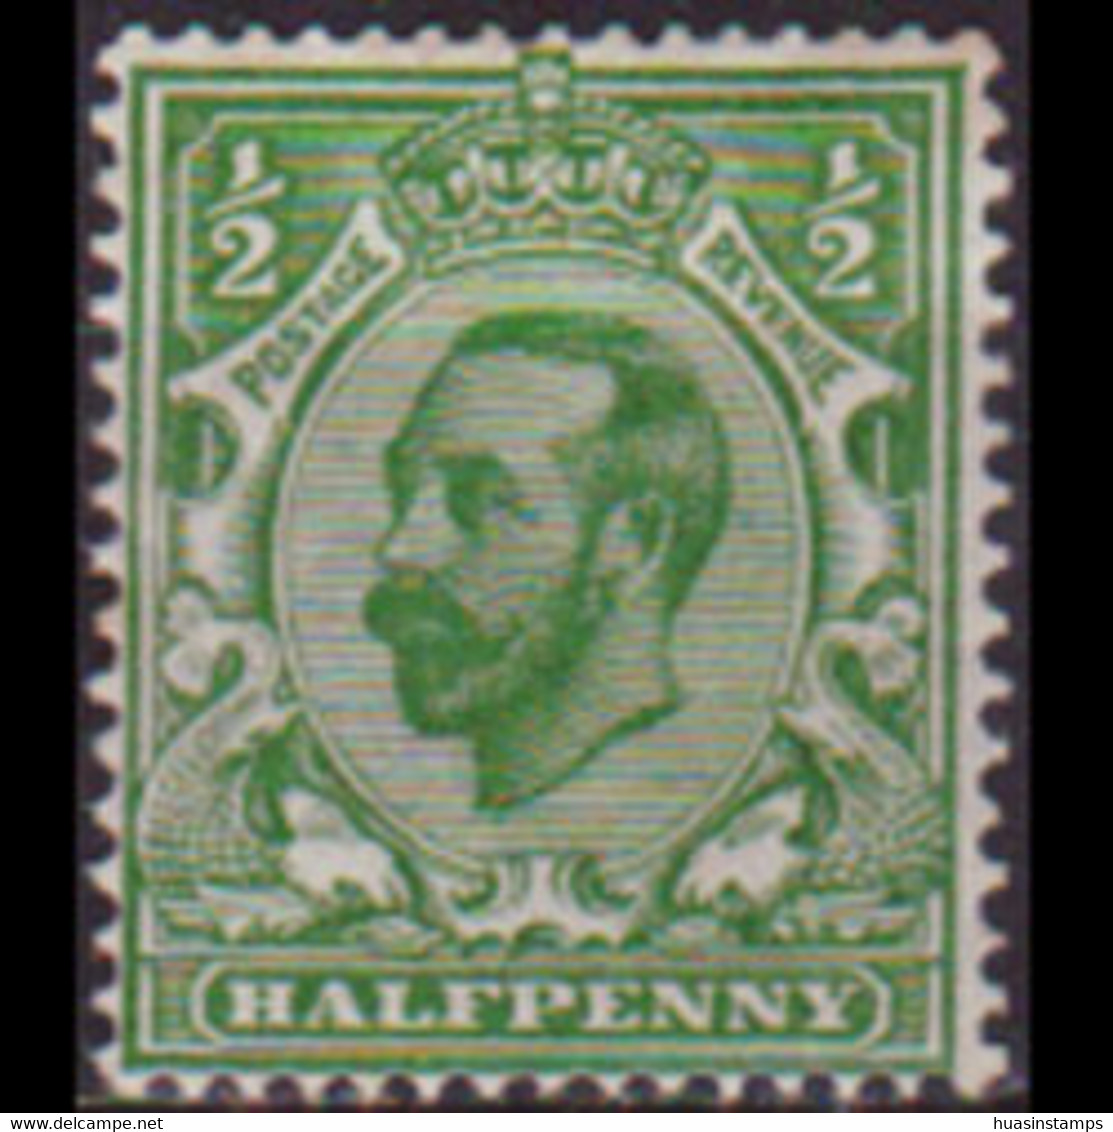 G.B. 1911 - Scott# 151 King GV 1/2p LH - Unused Stamps